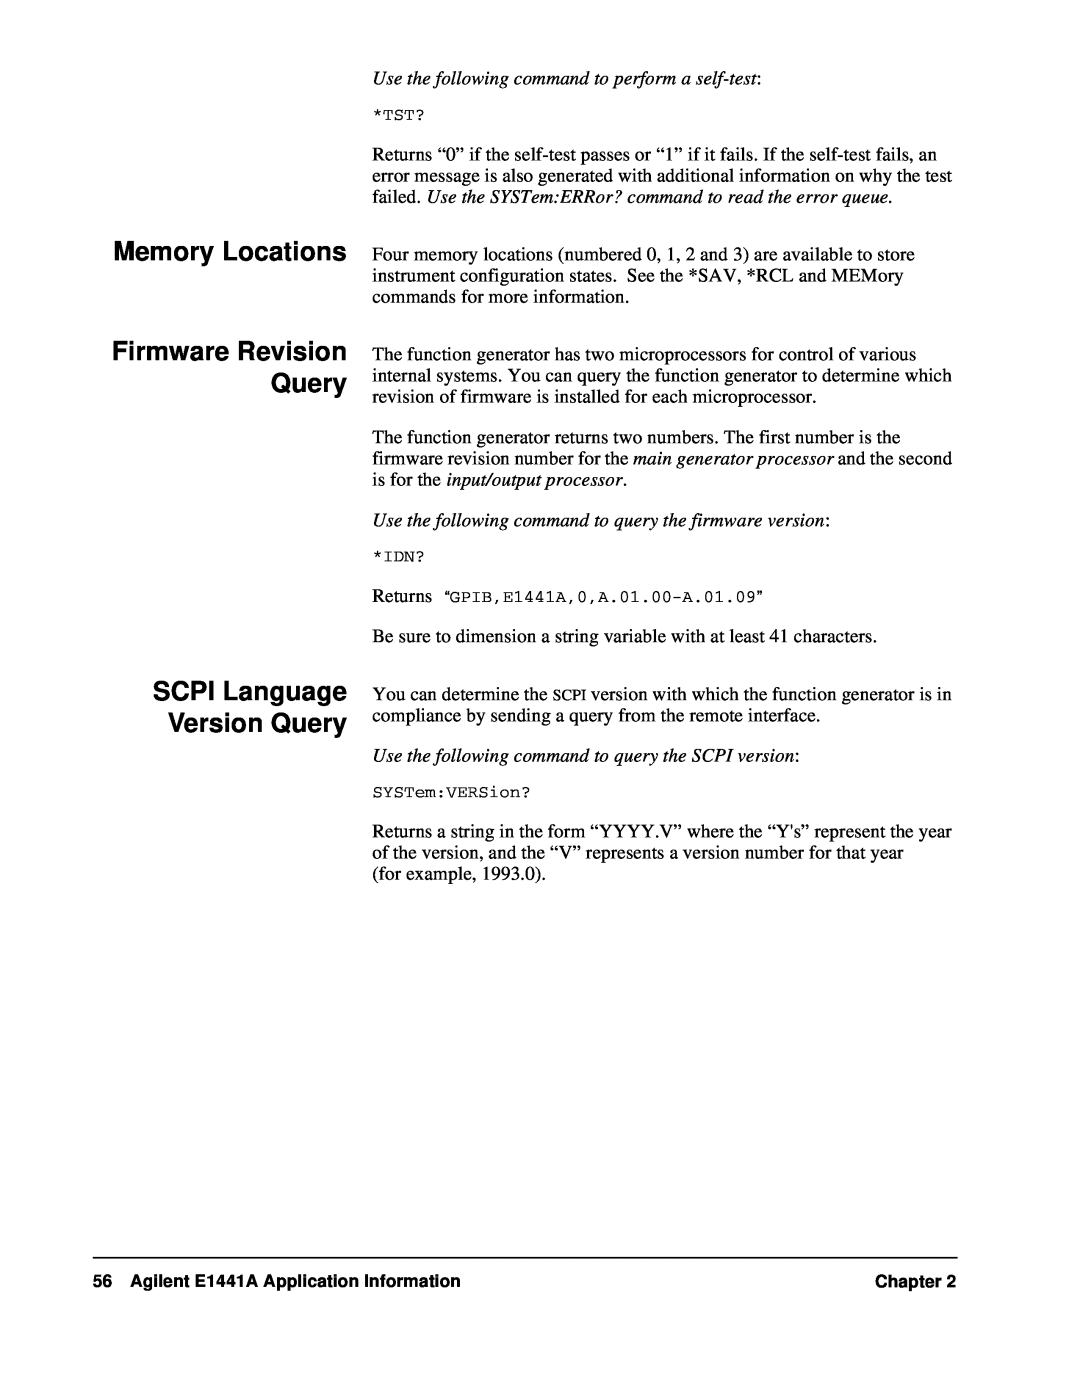 Agilent Technologies E1441A user service Firmware Revision Query, SCPI Language Version Query 